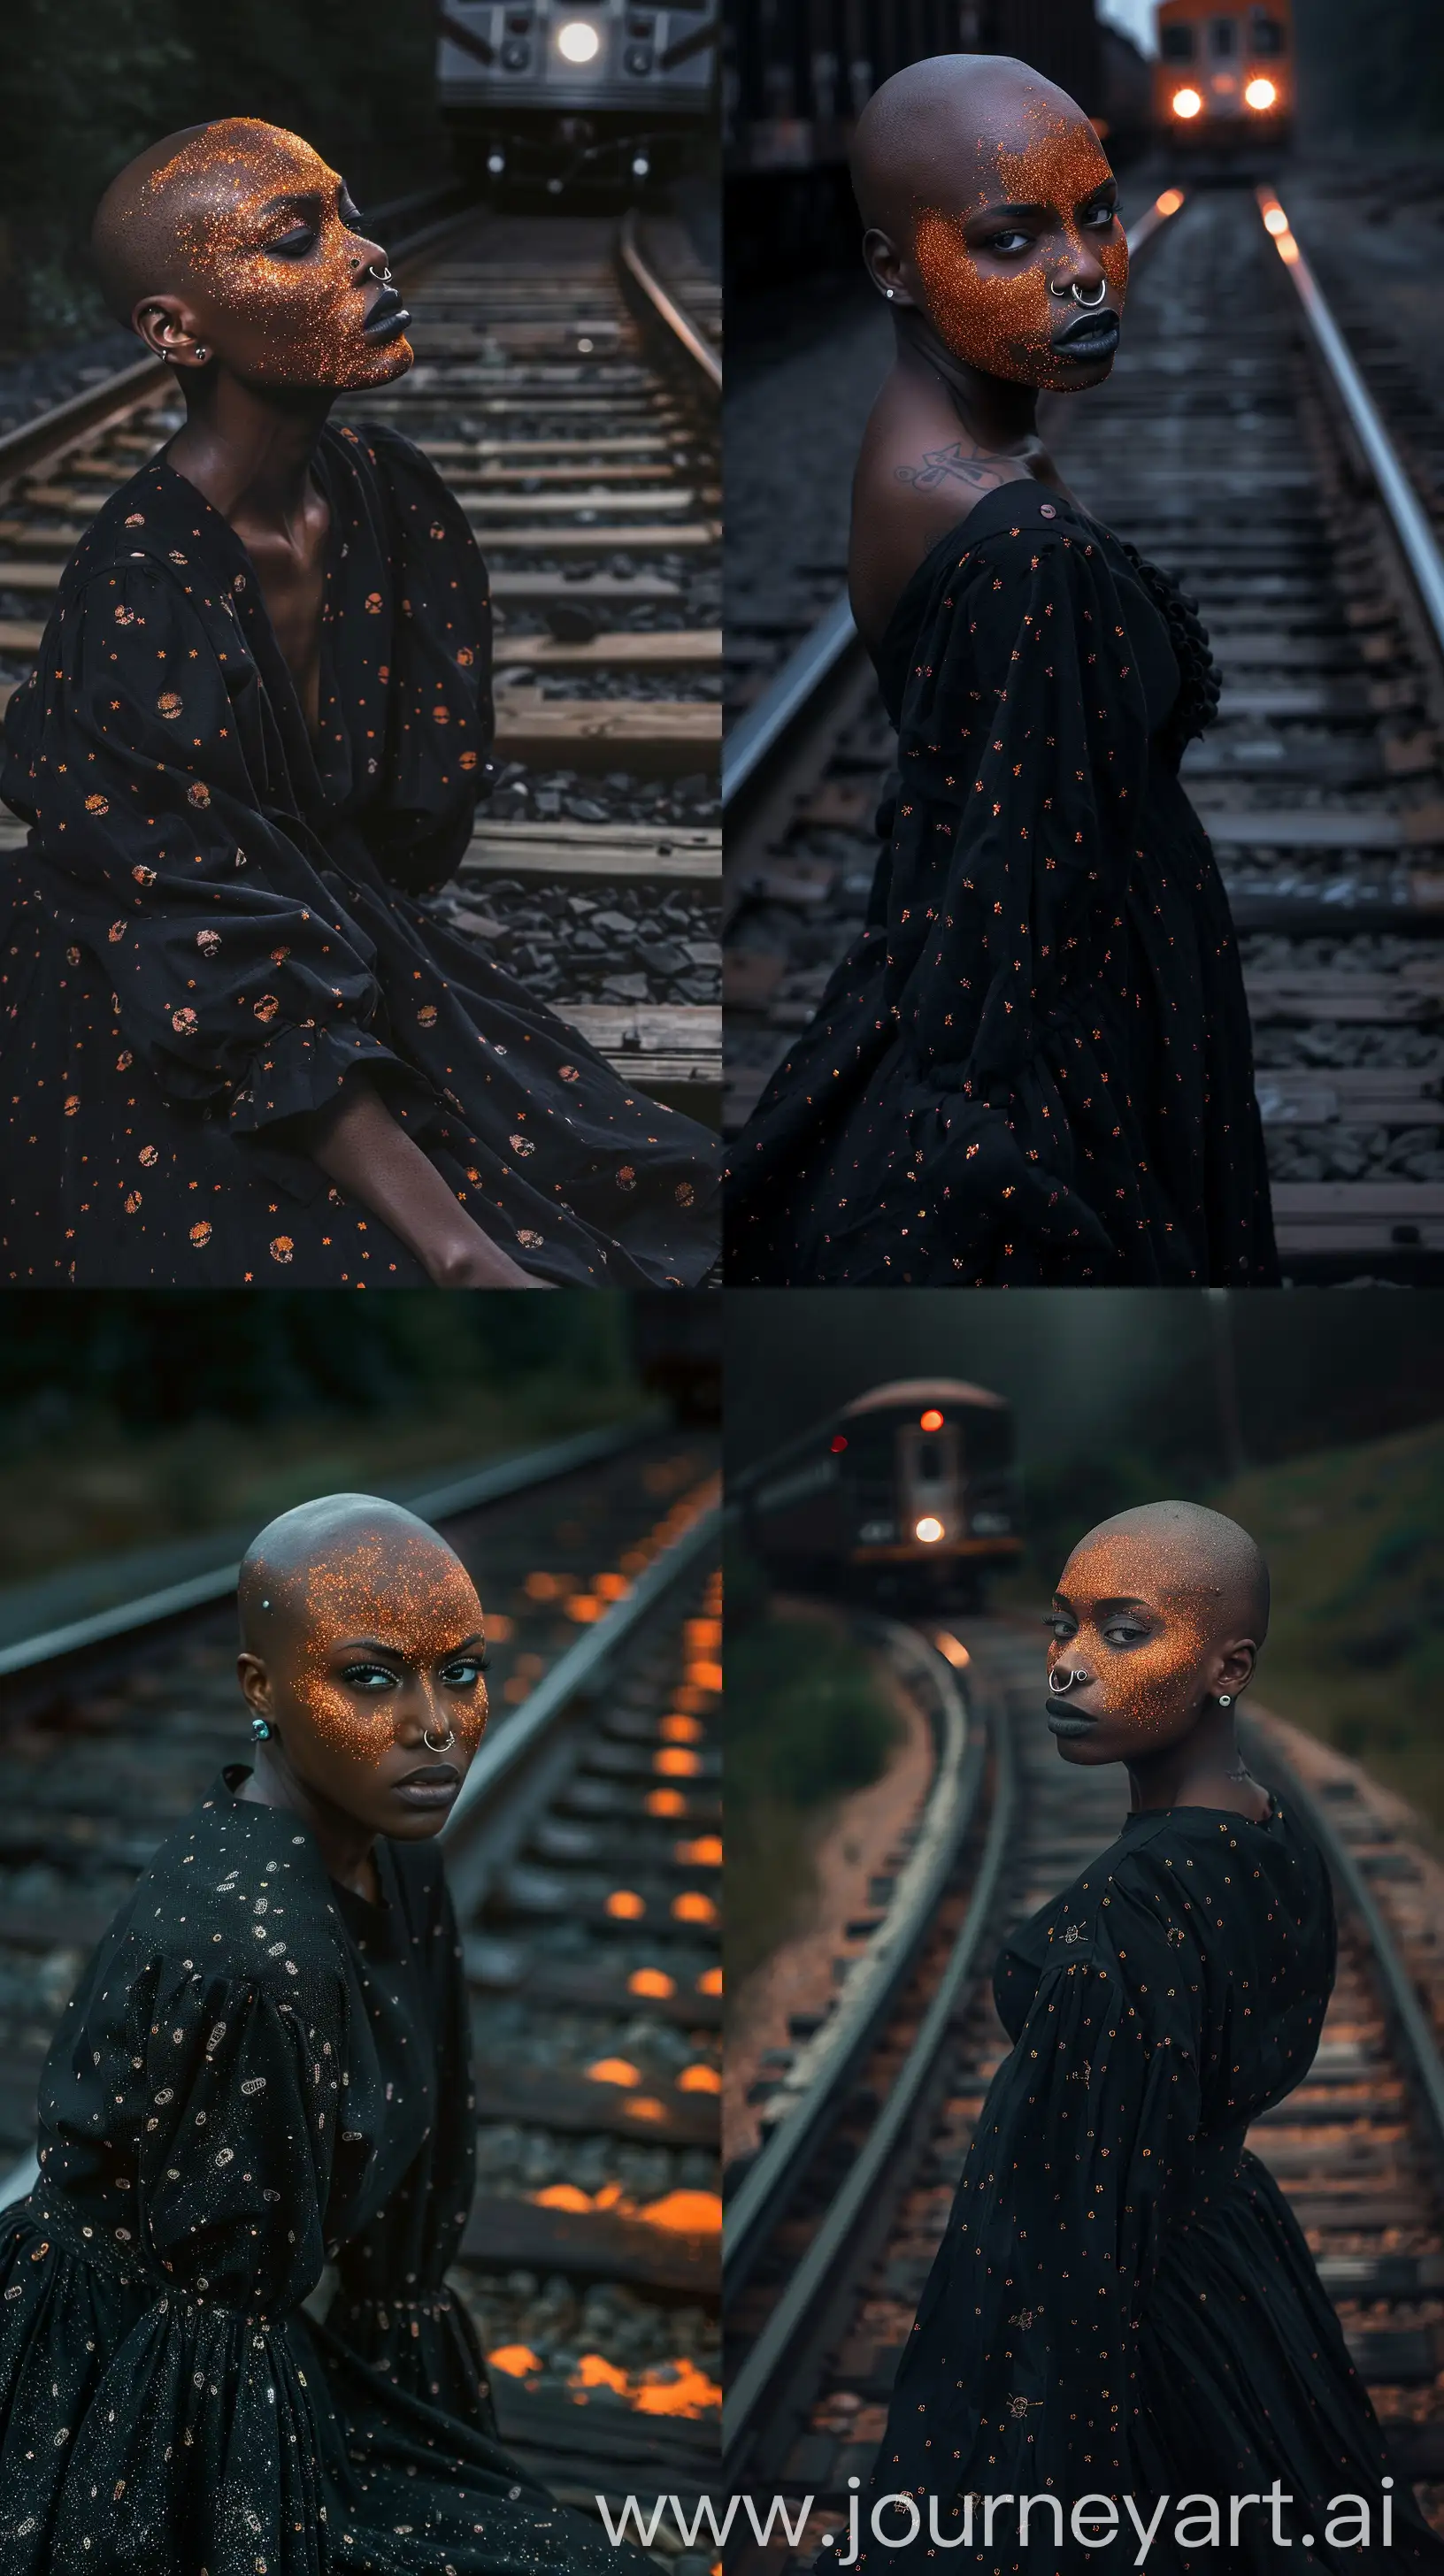 Solitary-Black-Woman-on-Railroad-Track-Facing-Oncoming-Train-in-Dark-Midnight-Scene